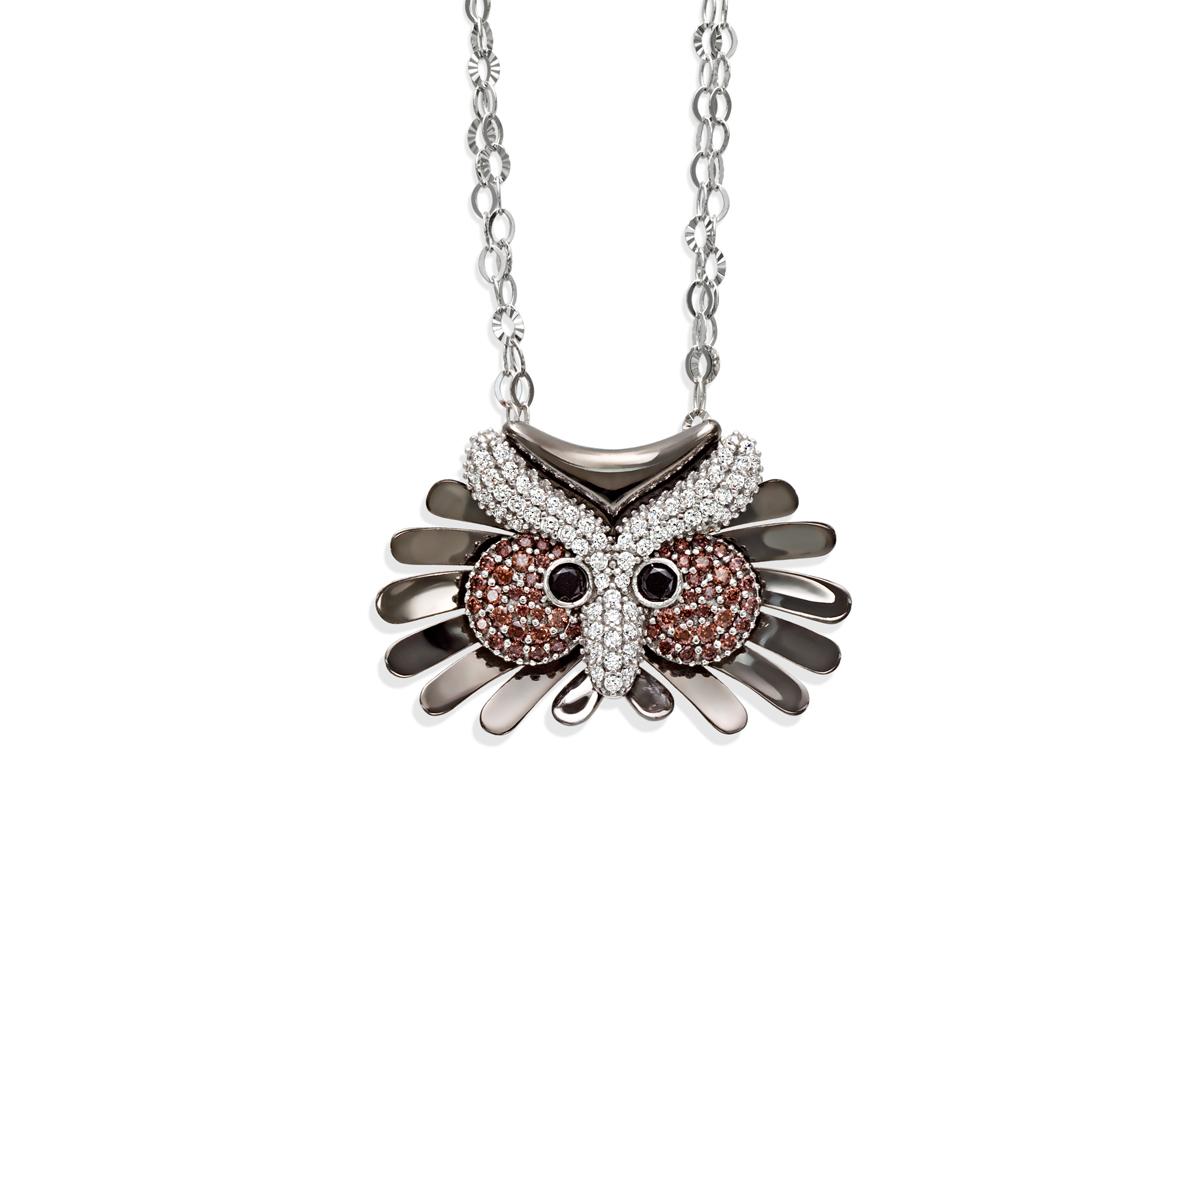 Silver owl pendant necklace